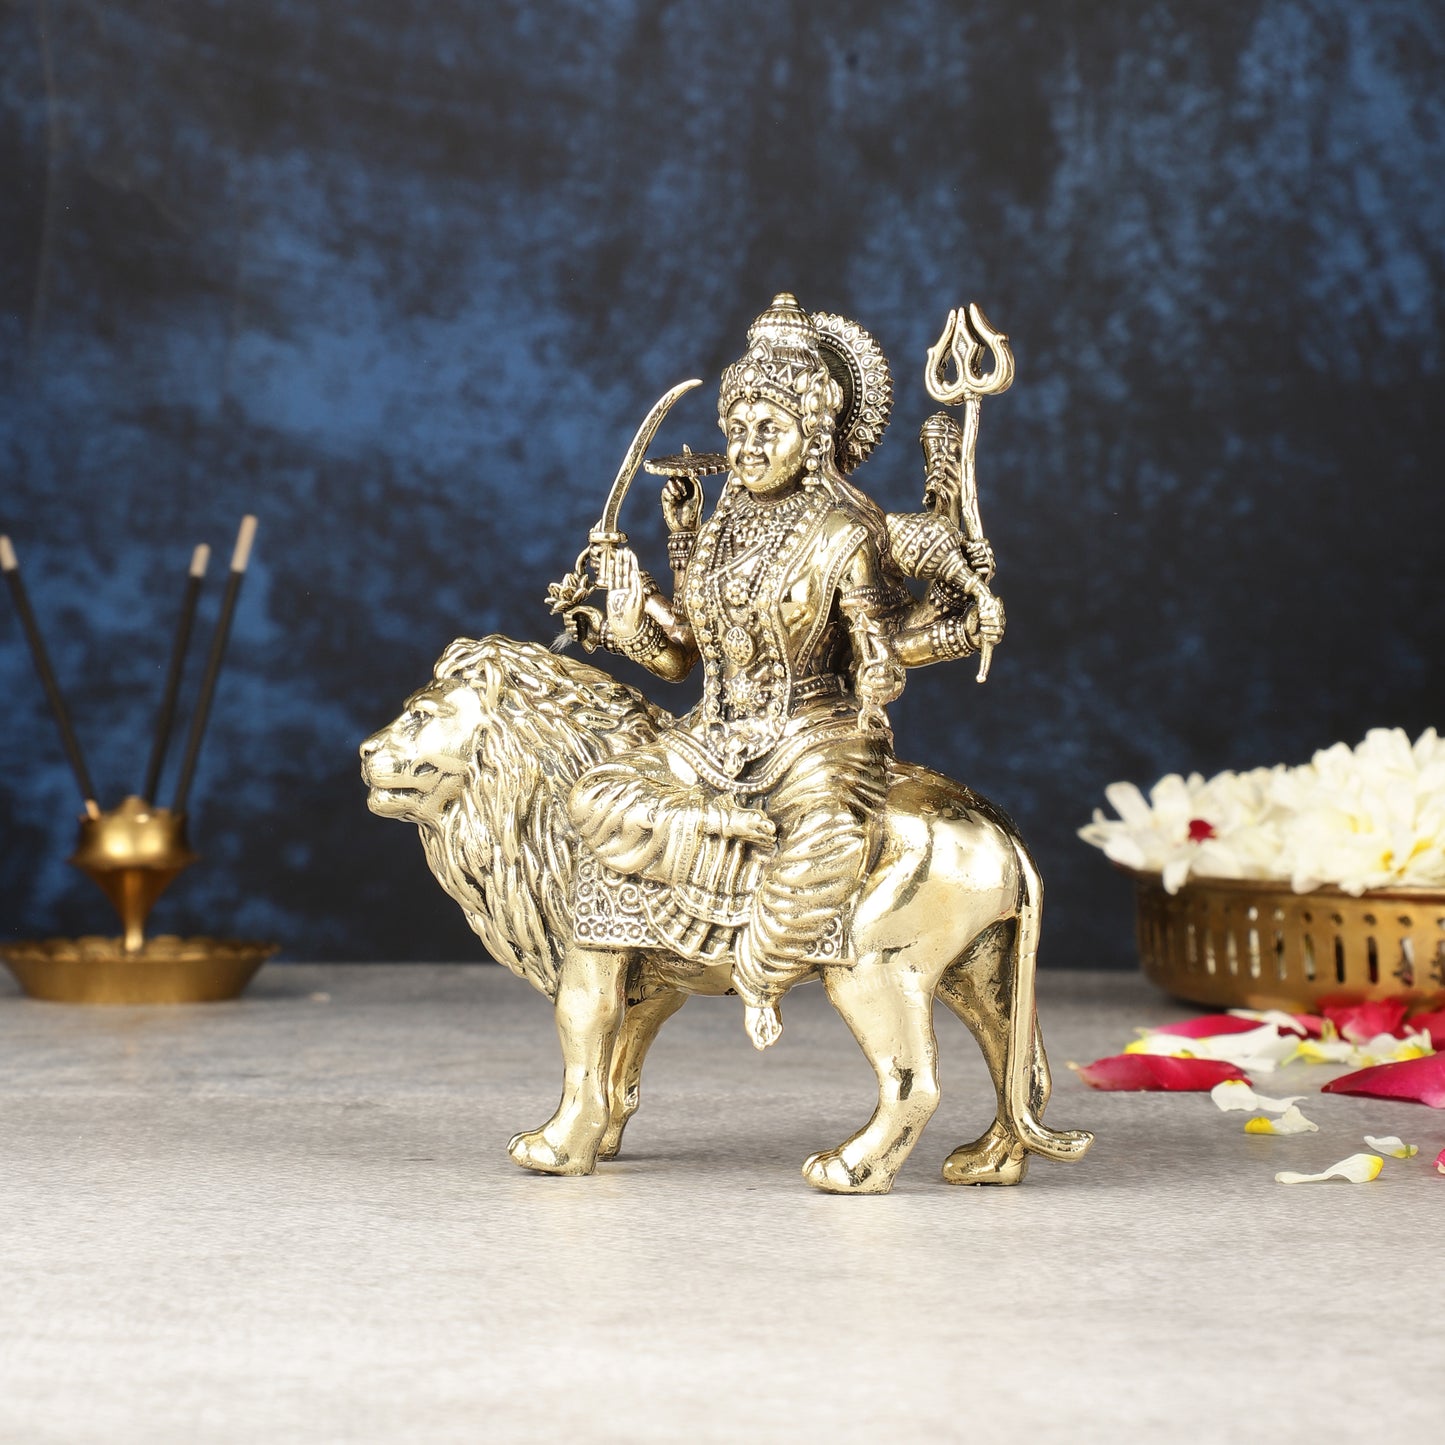 Intricate Lightweight Brass Goddess Durga Idol - 6-inch